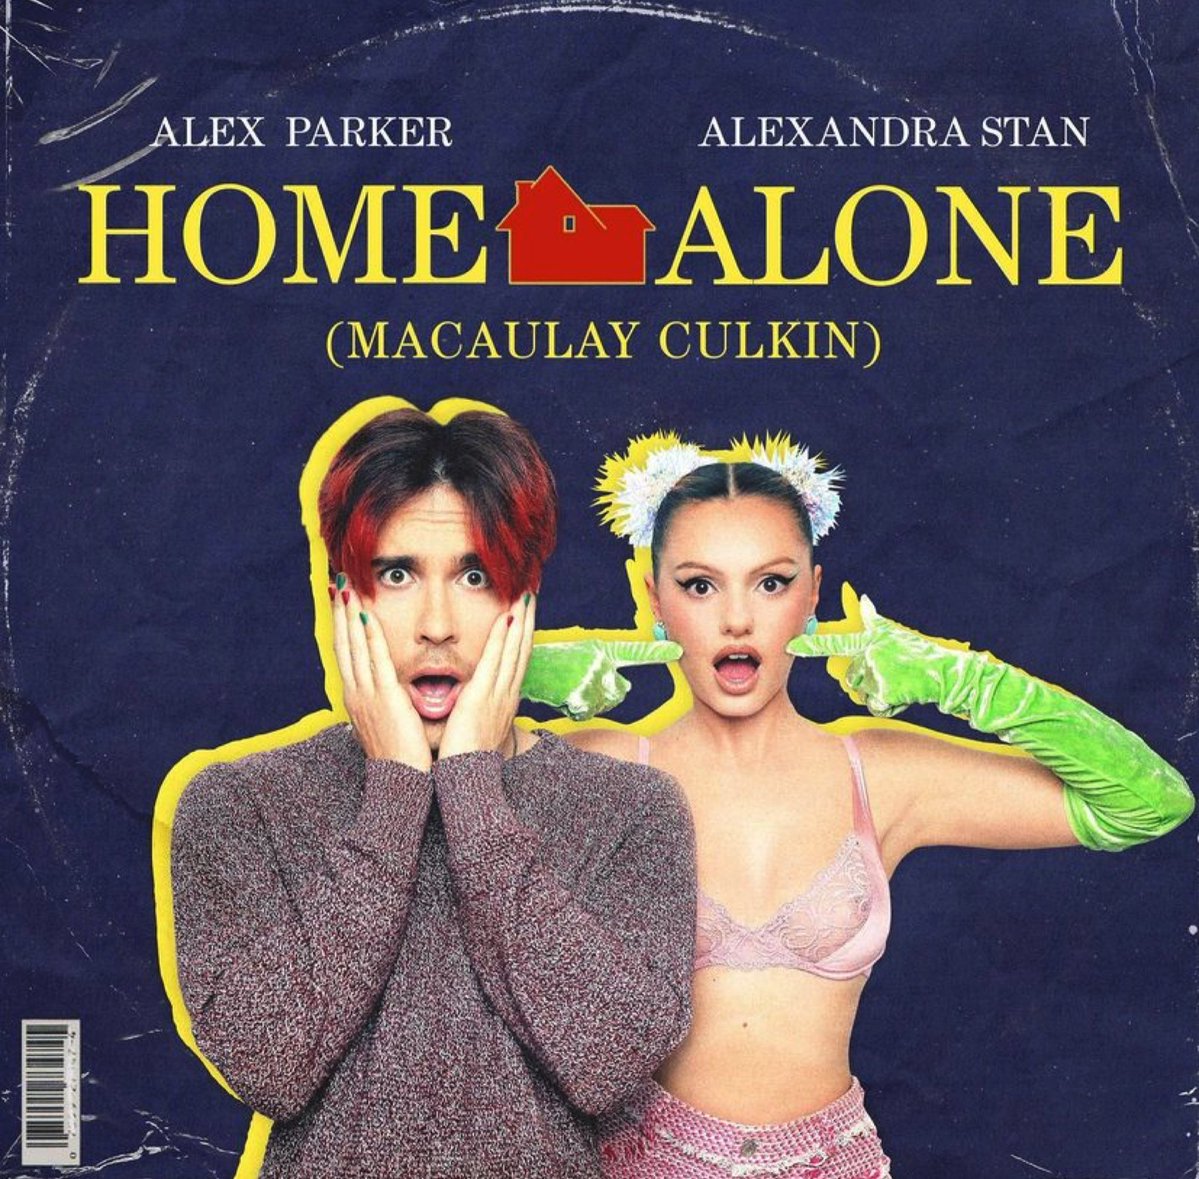 Alex Parker & Alexandra Stan Home Alone (Macaulay Culkin) cover artwork